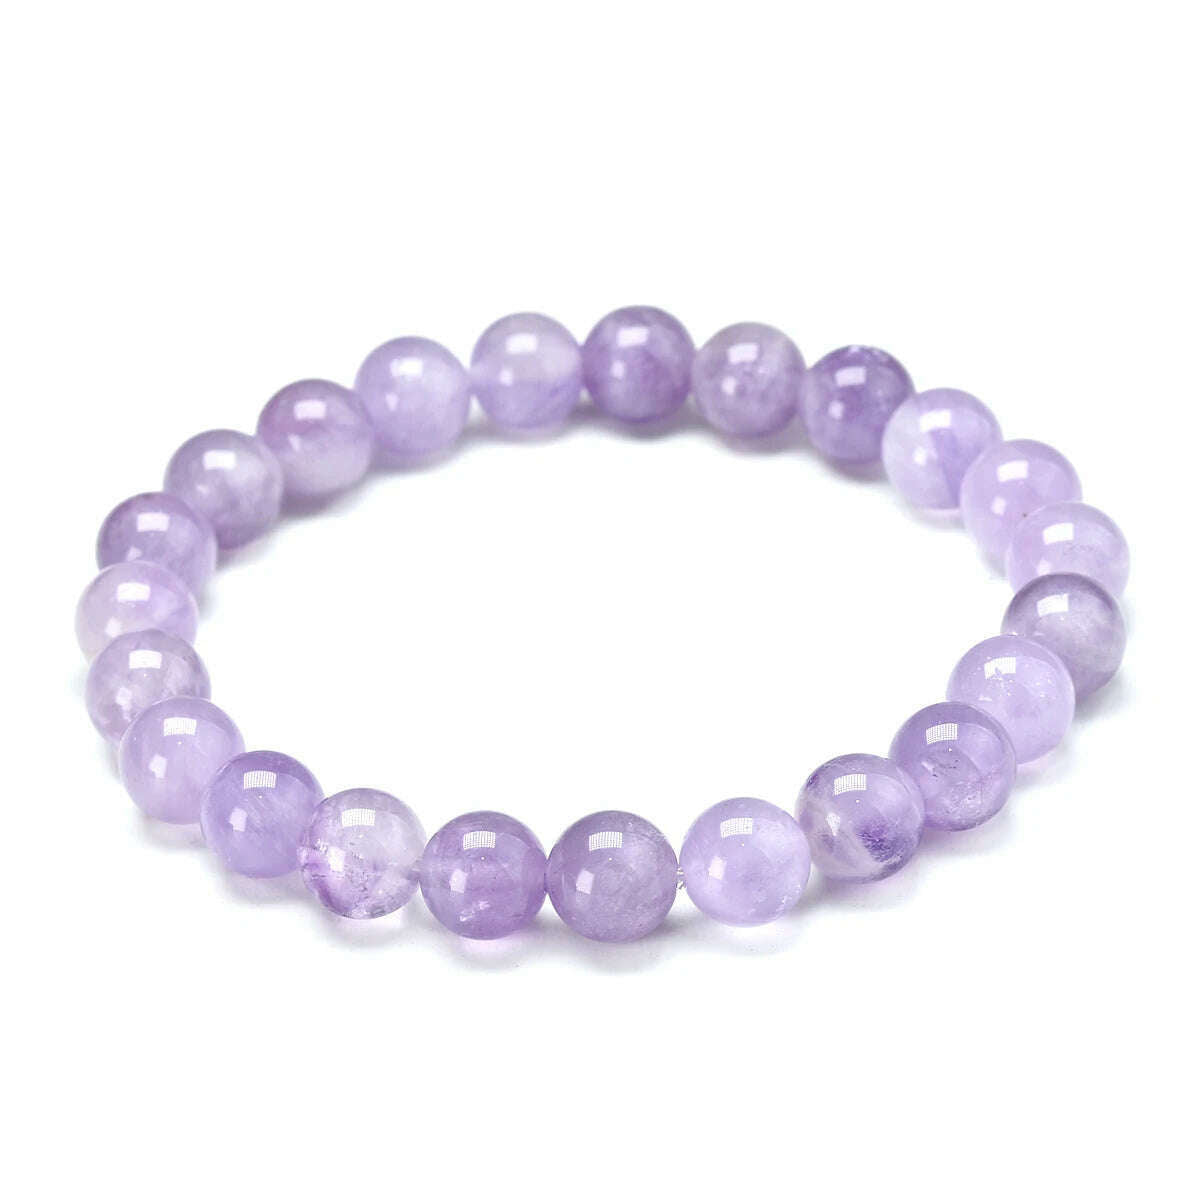 KIMLUD, Natural Purple Jade Round Bead Bracelet 6mm 8mm10mm Healing Spirit Bracelets Gem For Women and Men Strand Meditation Jewelry, 8mm / 16cm, KIMLUD Women's Clothes